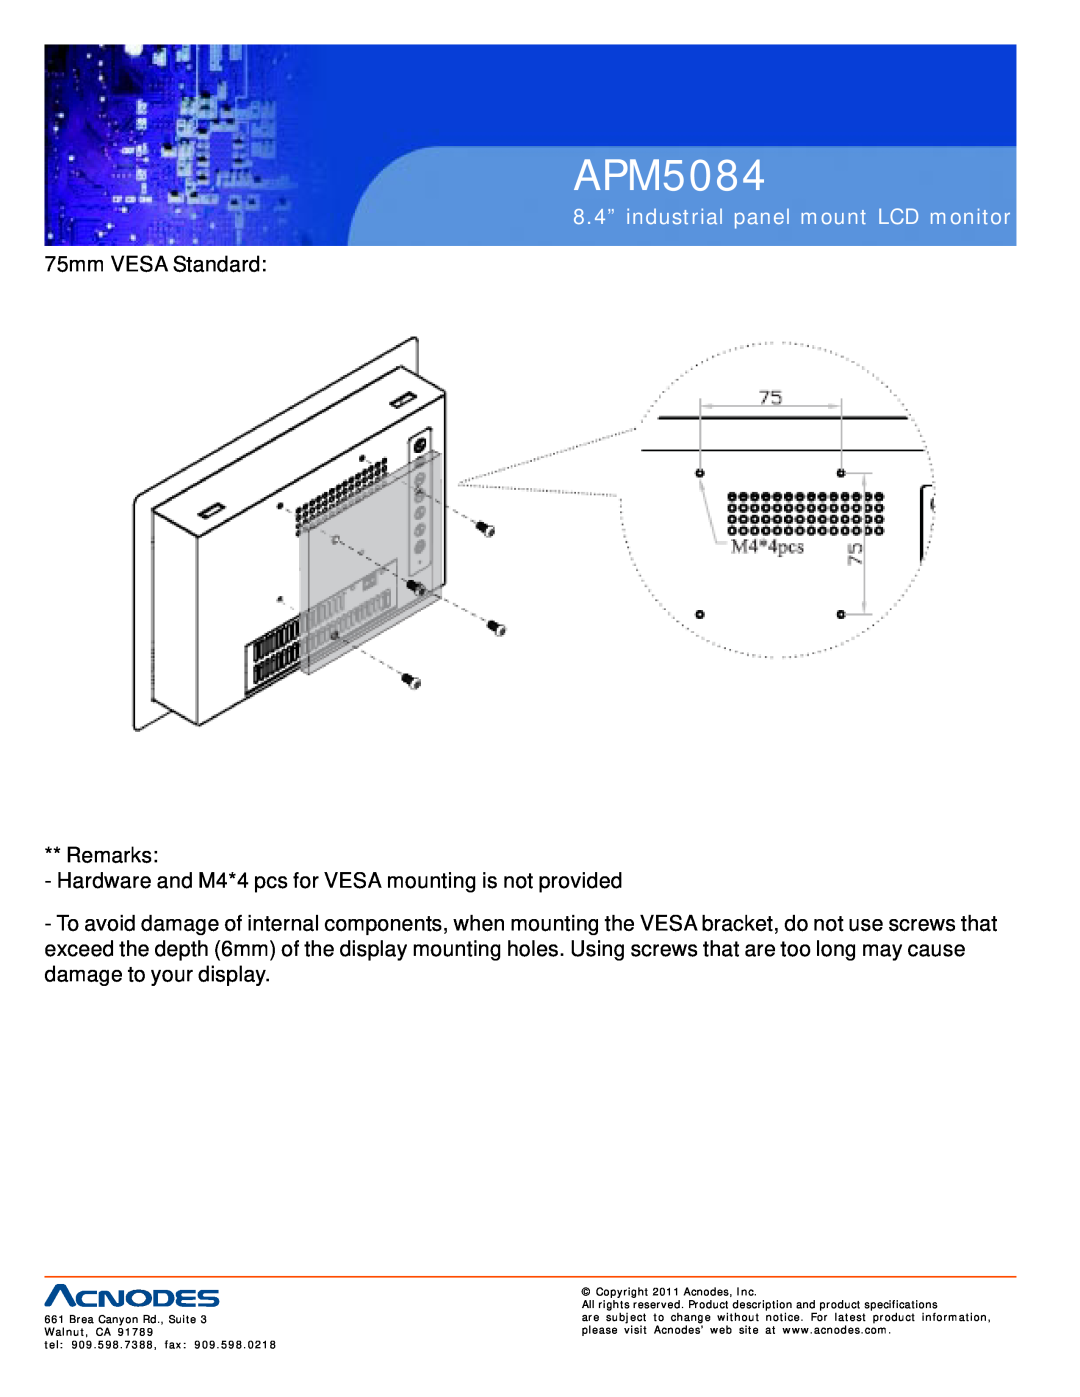 Acnodes APM5084 user manual 8.4” industrial panel mount LCD monitor, 75mm VESA Standard Remarks 